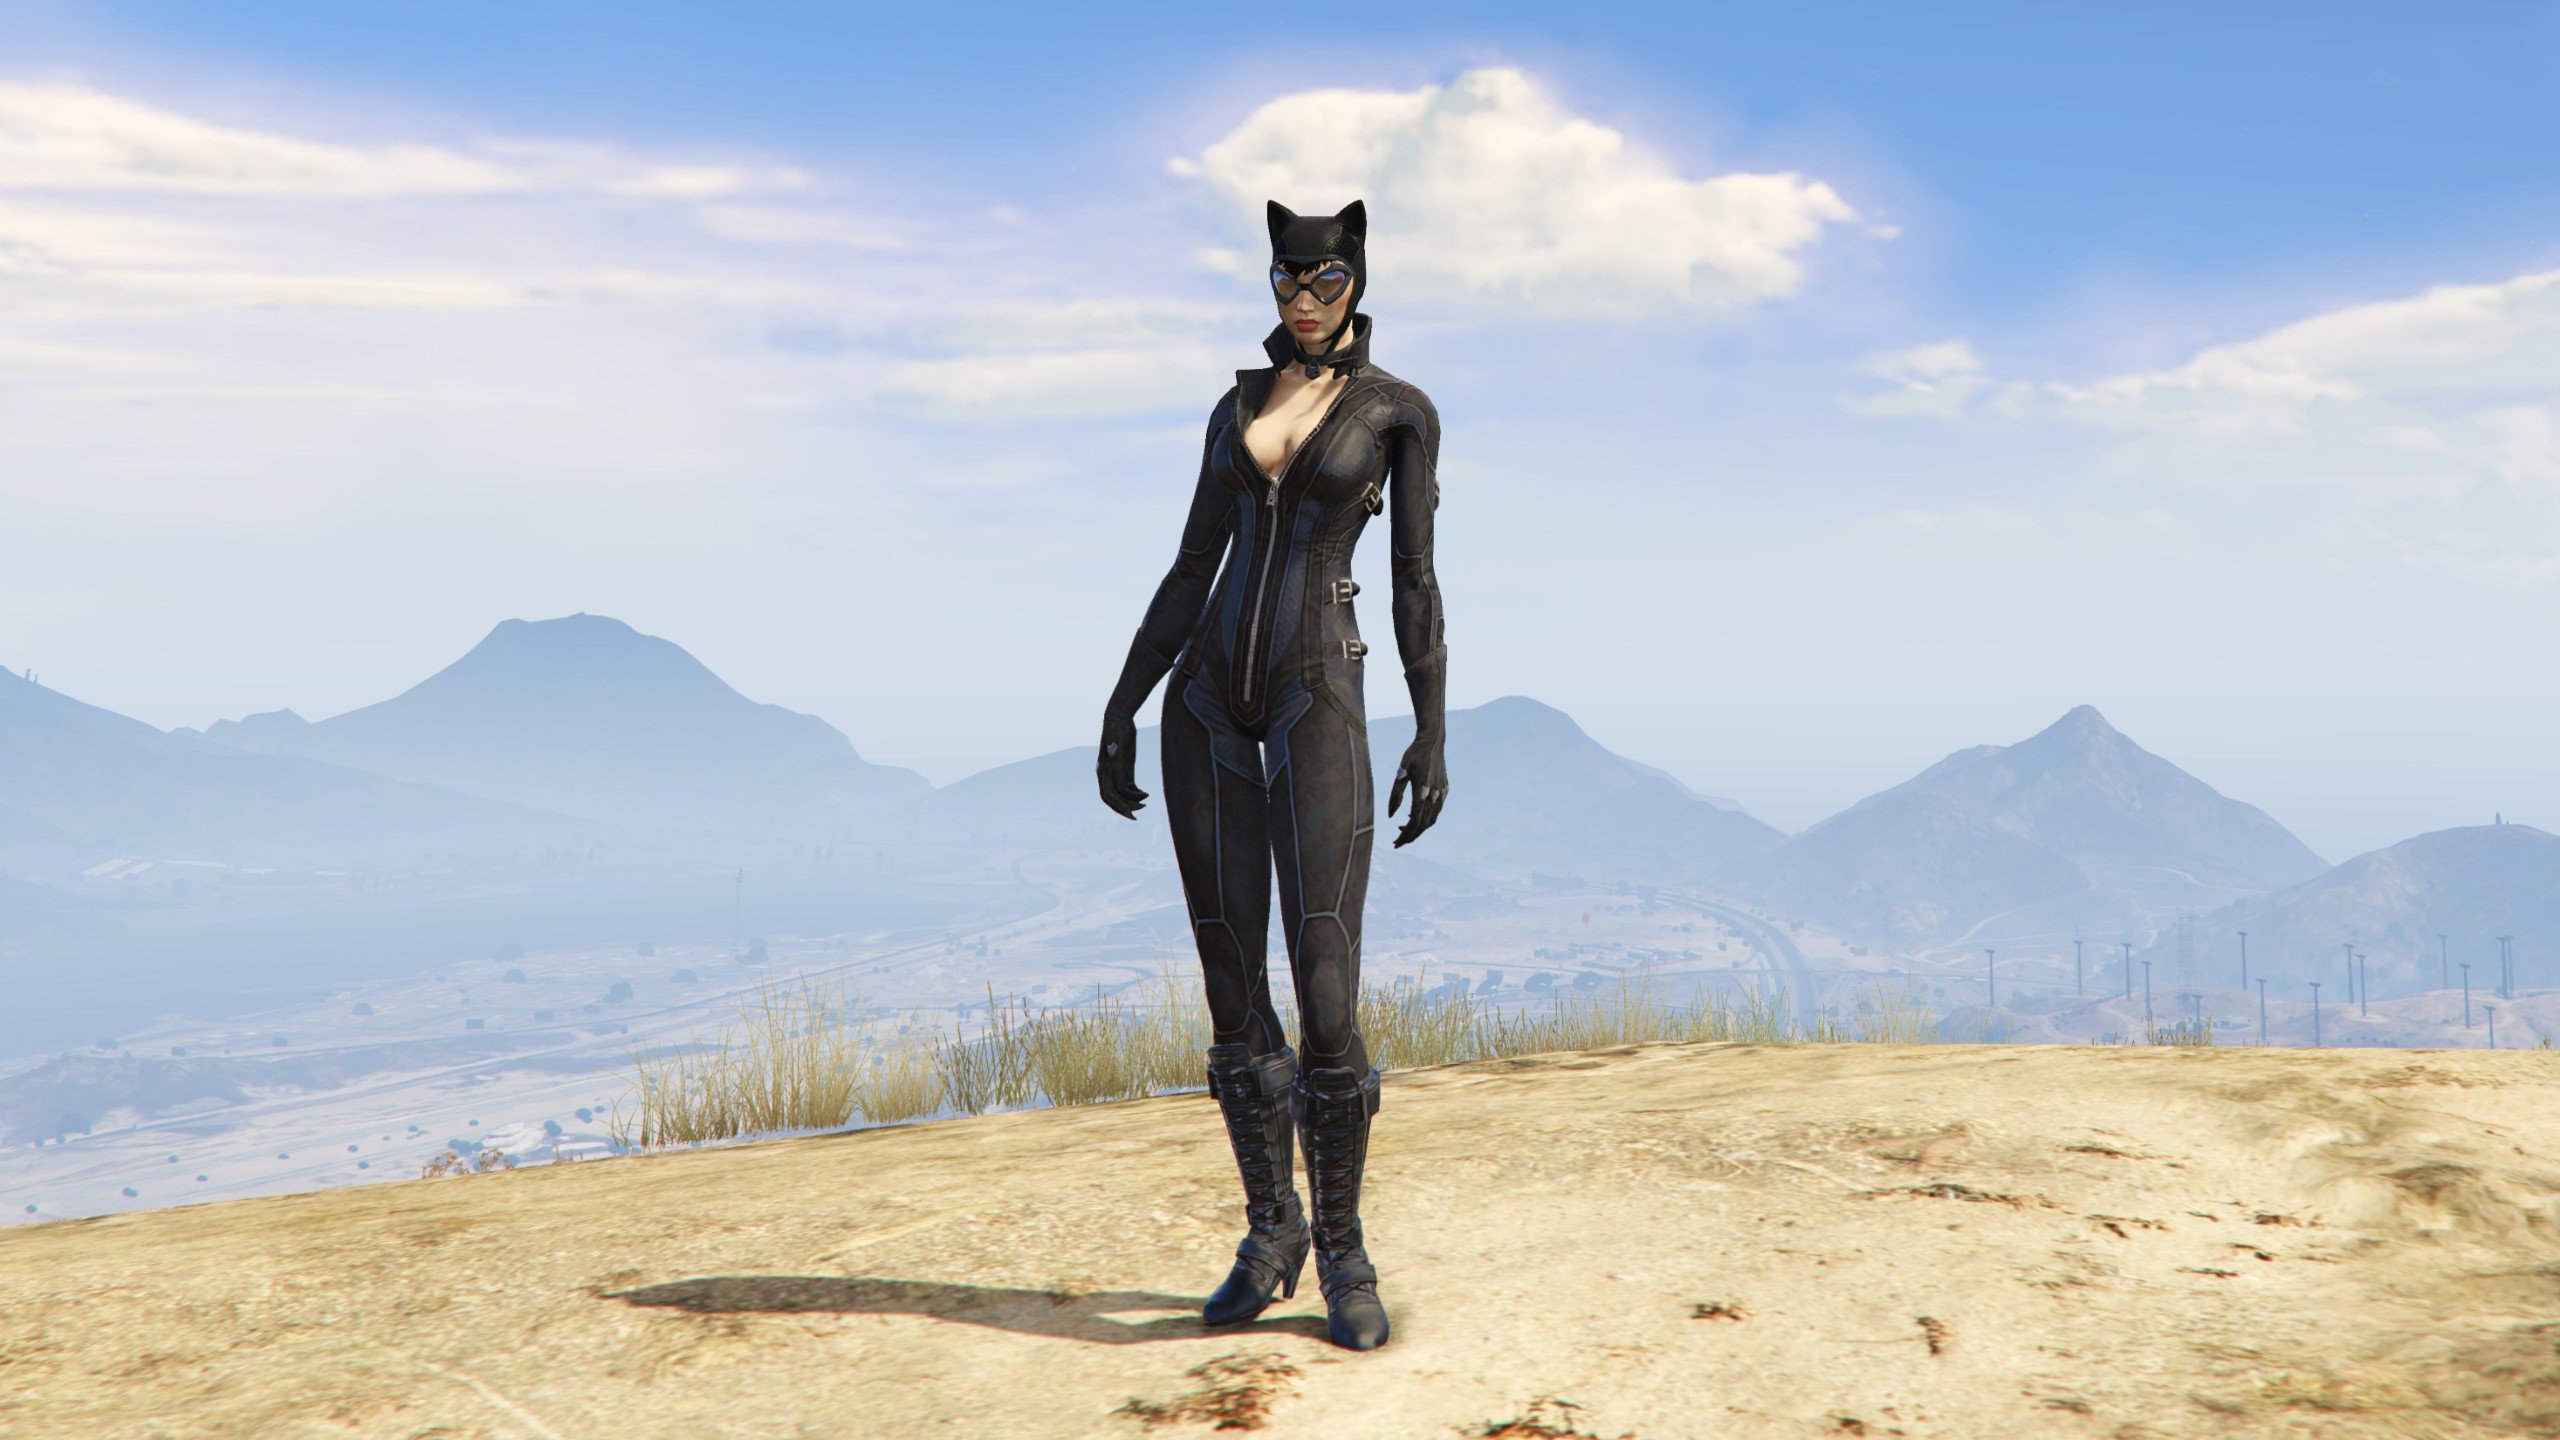 batman arkham city catwoman animated mod